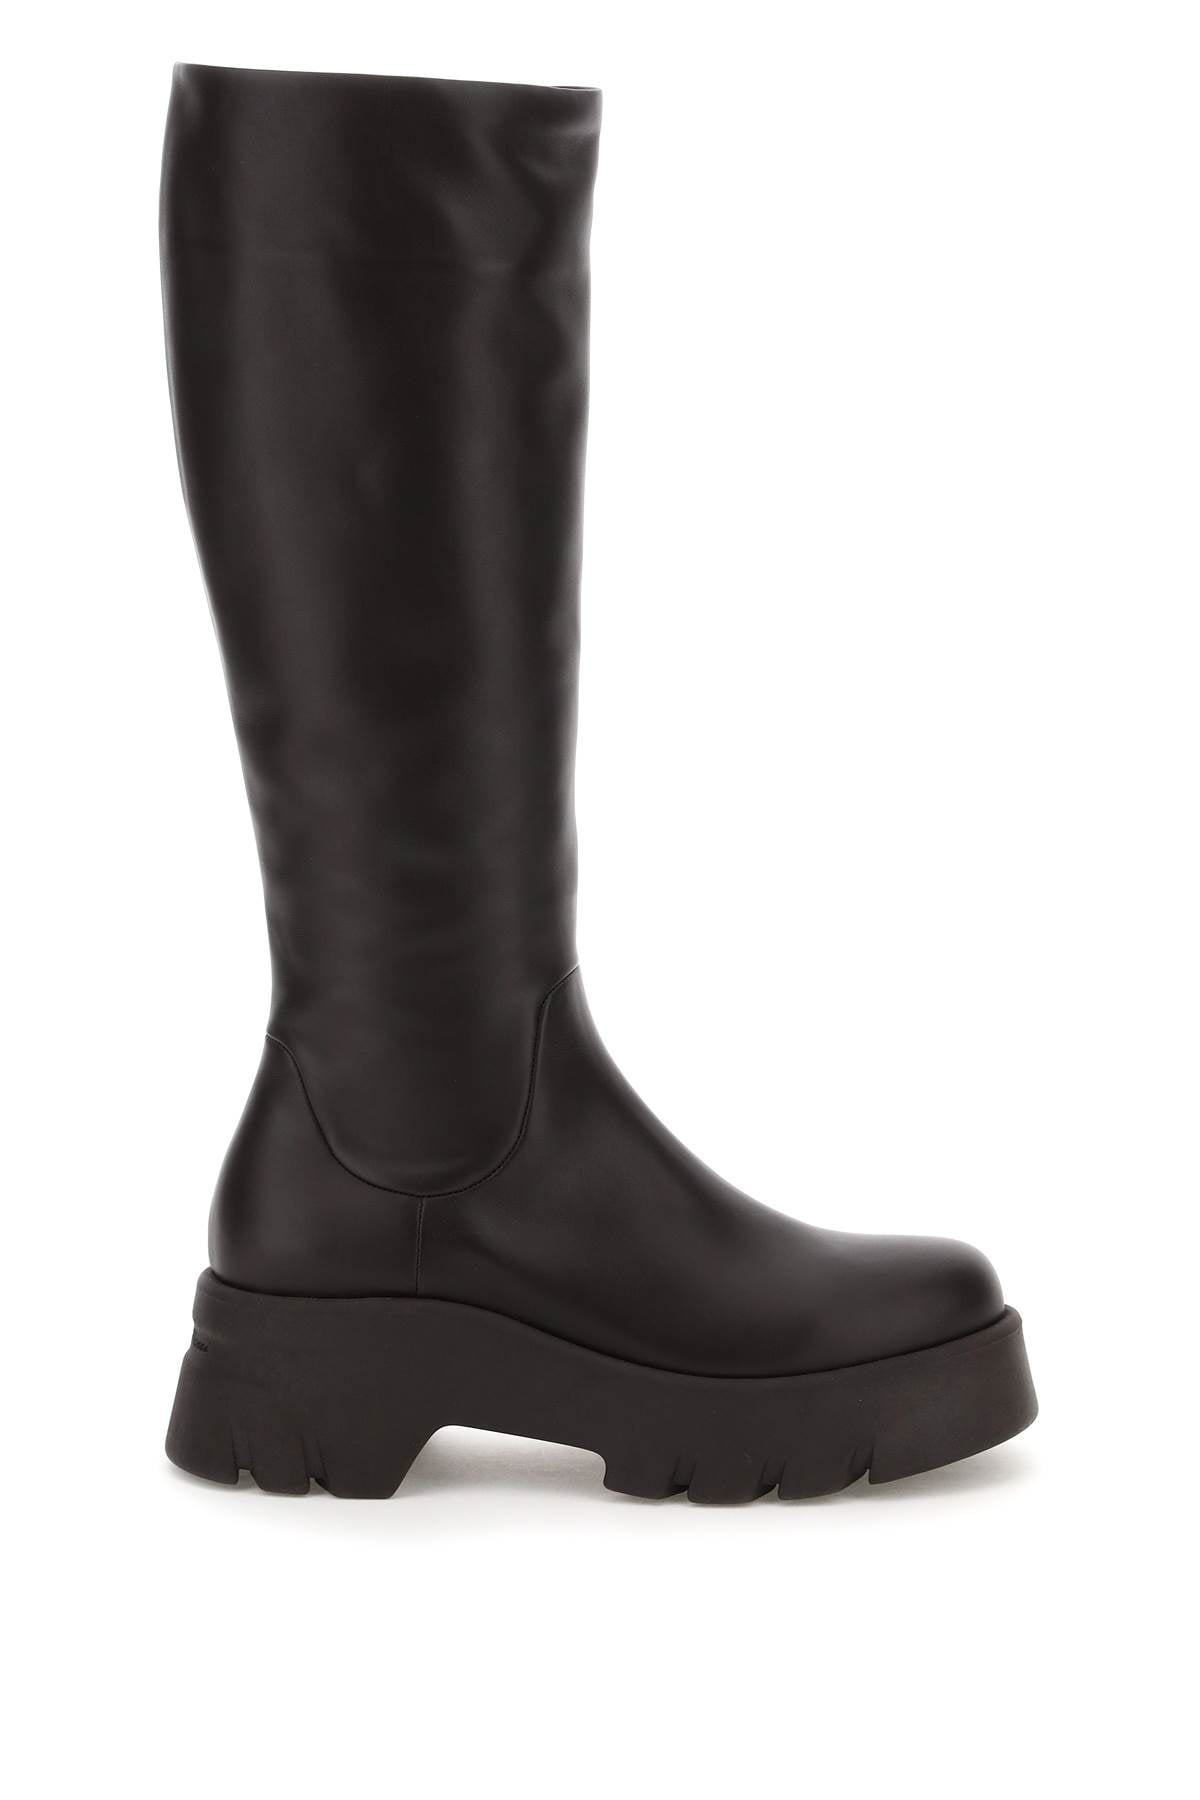 Gianvito leather boots - Walmart.com